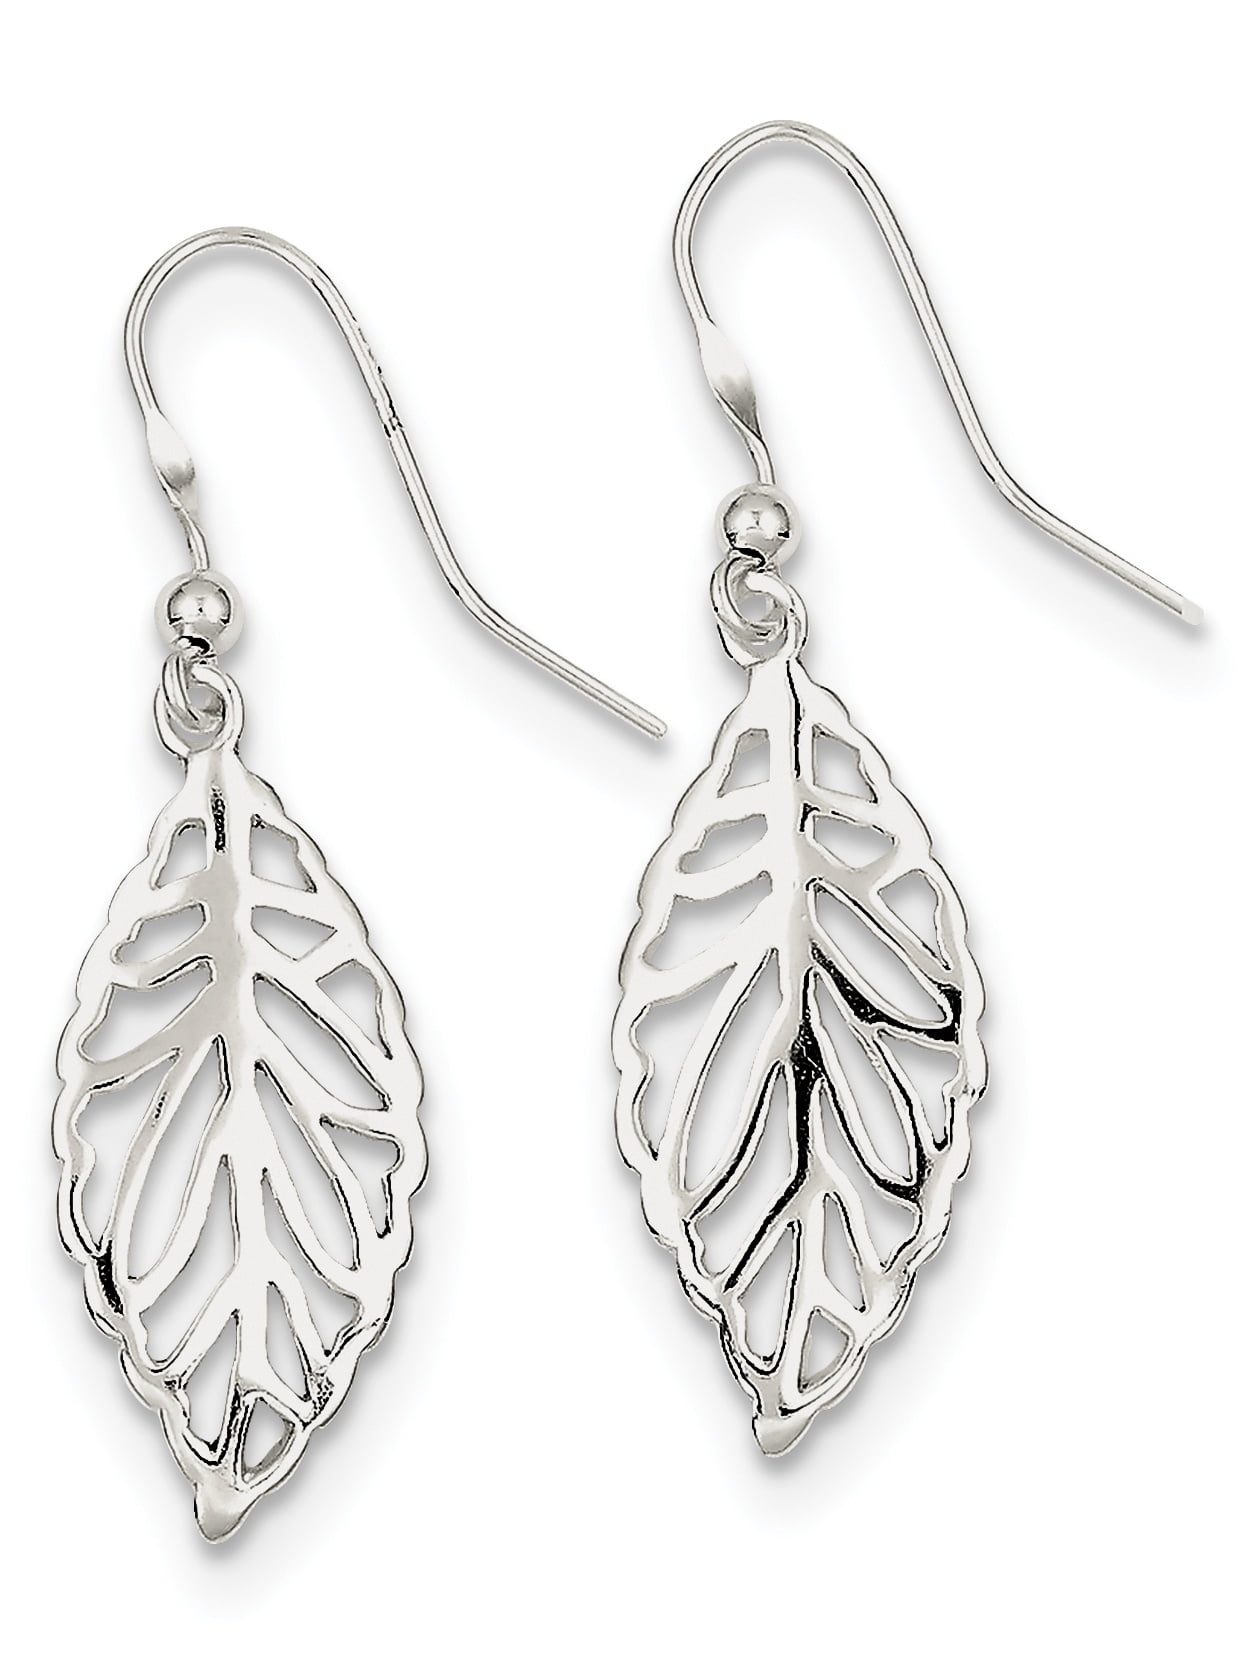 Details about   Sterling Silver Polished Leaf Dangle Earrings MSRP $97 